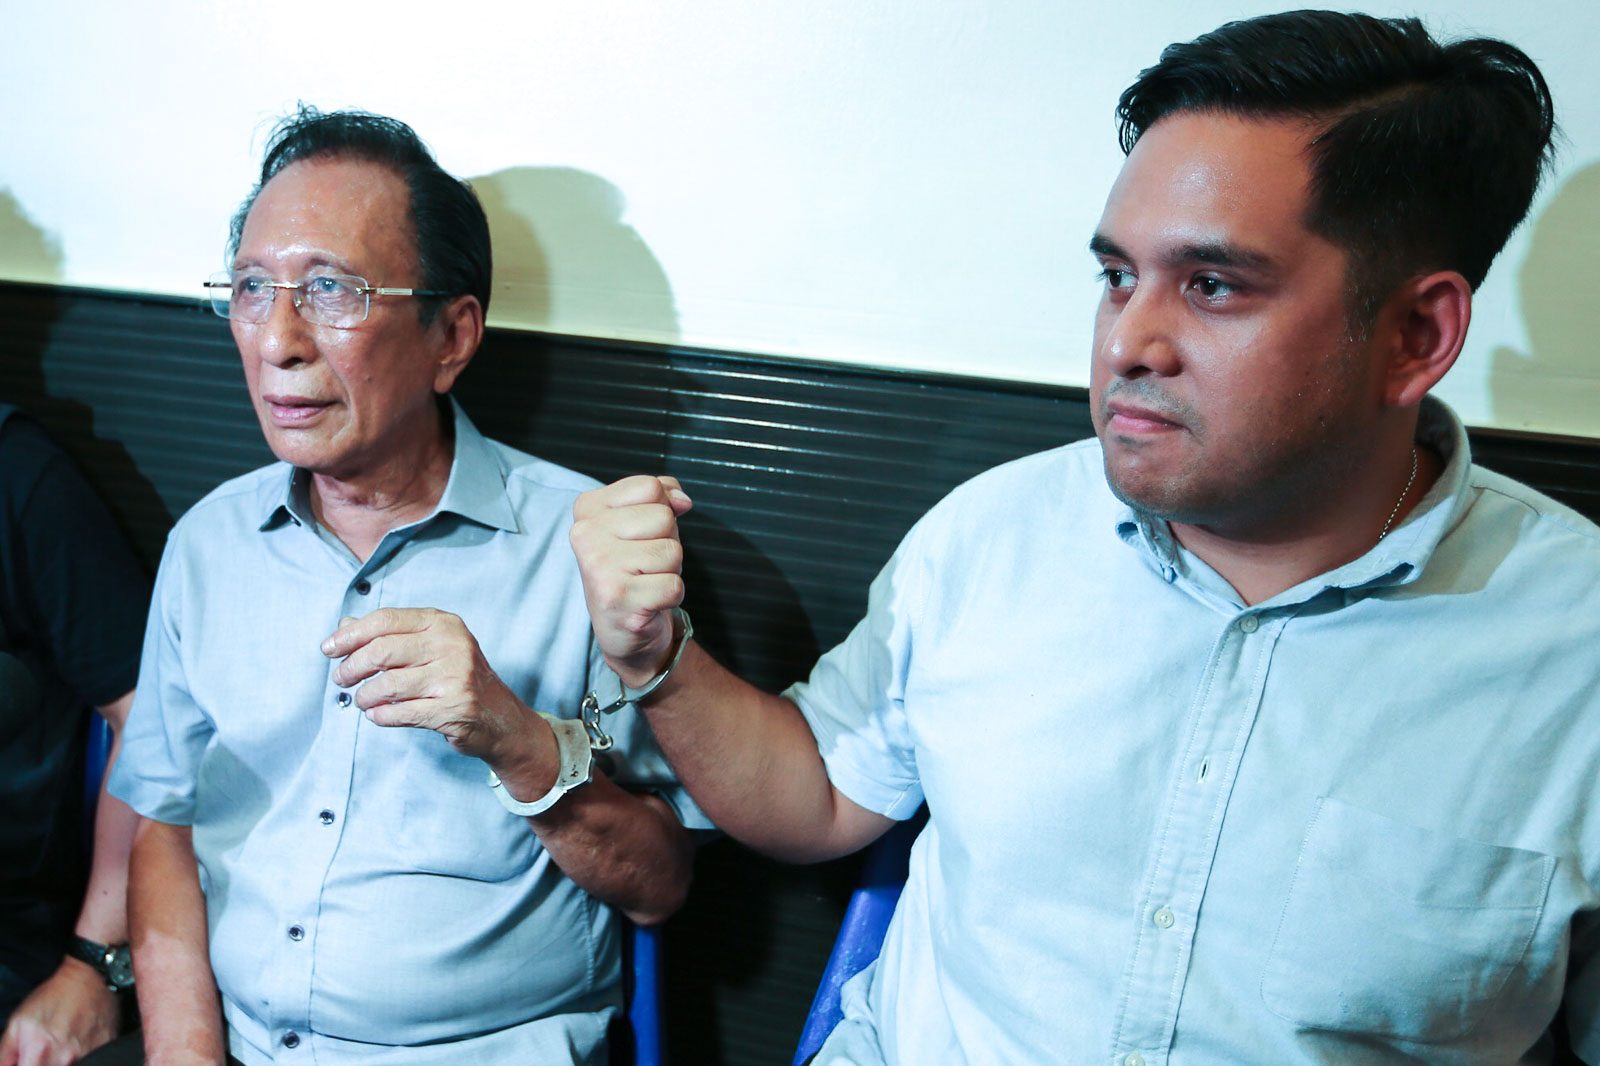 Crisologo to sue Quezon City police for ‘illegal arrest’